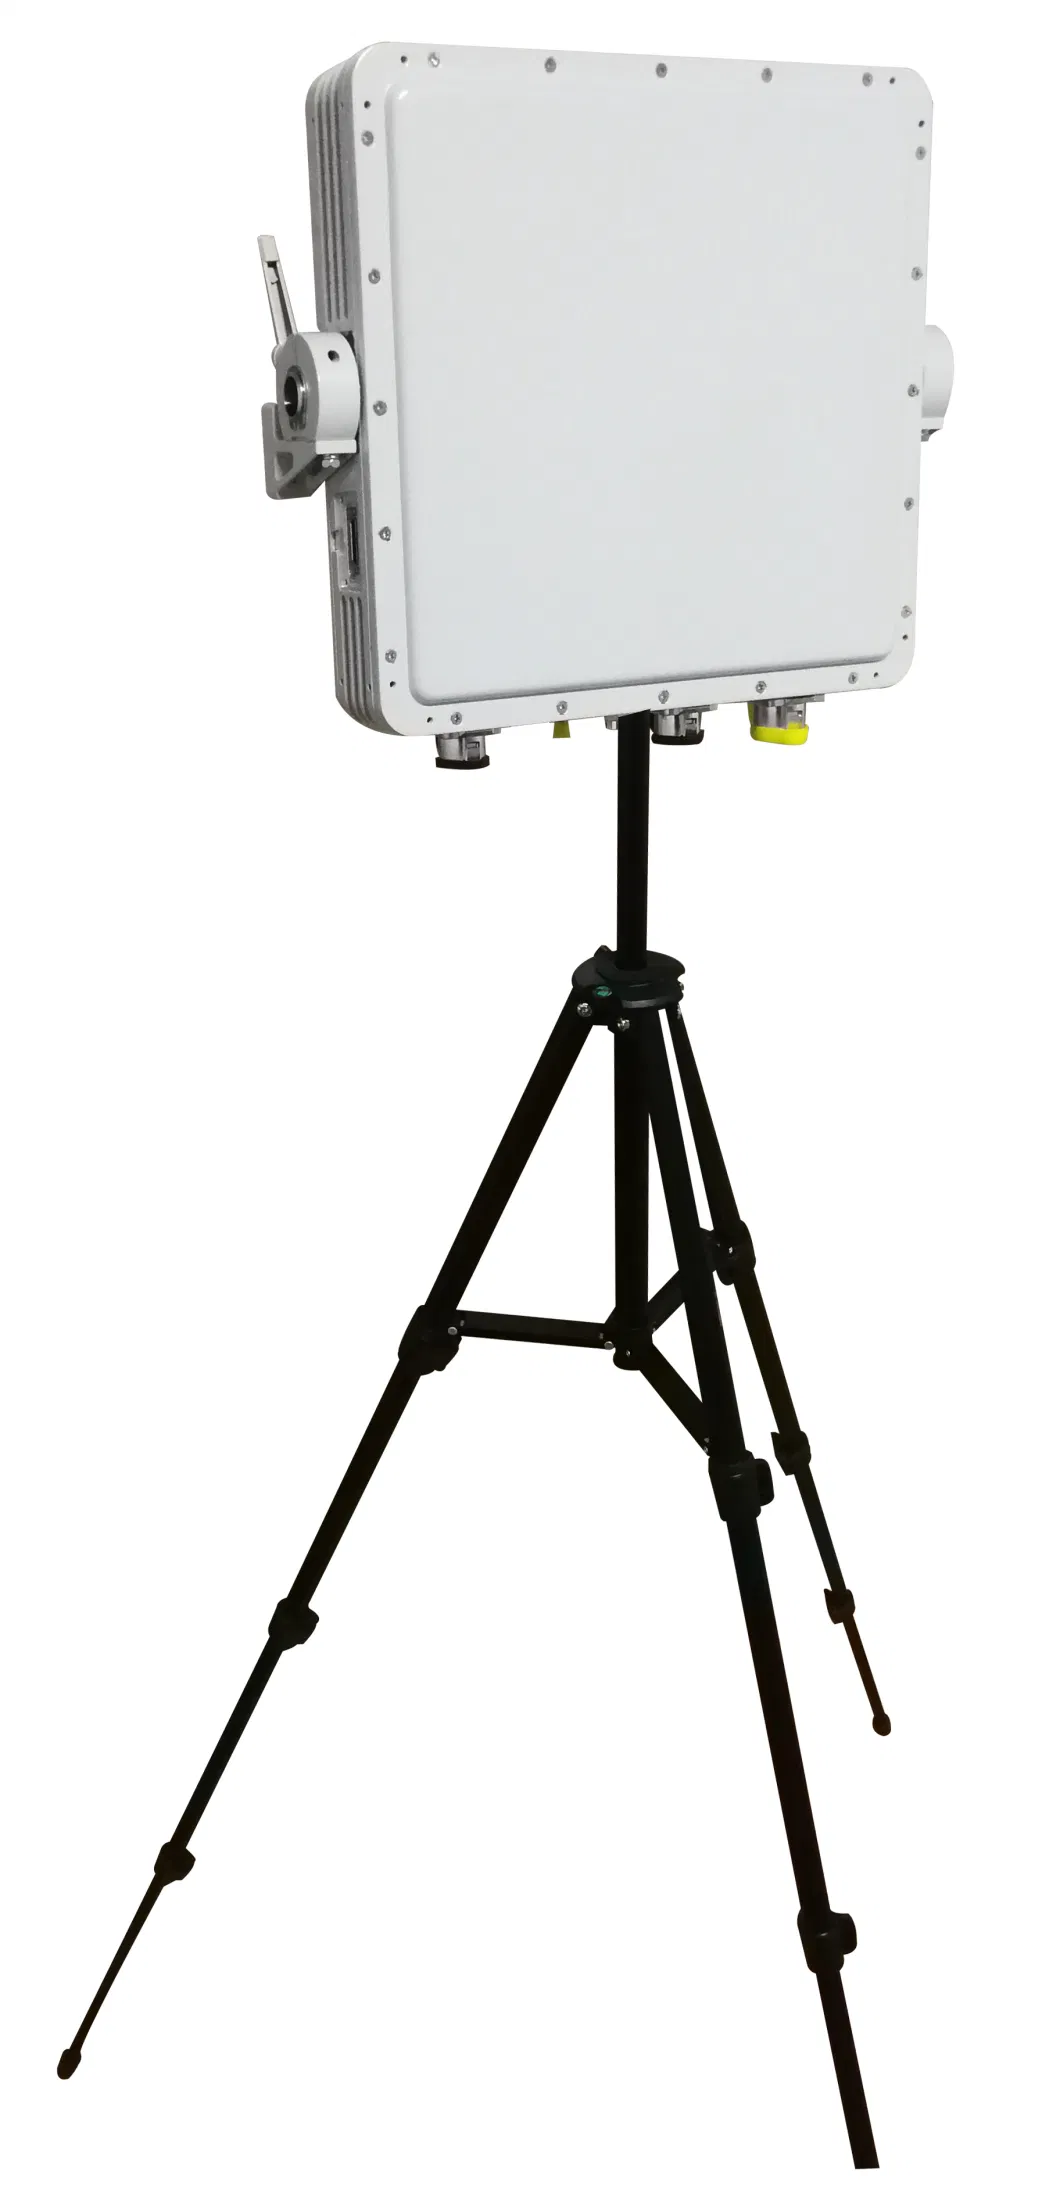 Man-Portable Surveillance Radar Providing Premium Situational Awareness in Border-, Coastal- and Site-Surveillance Application